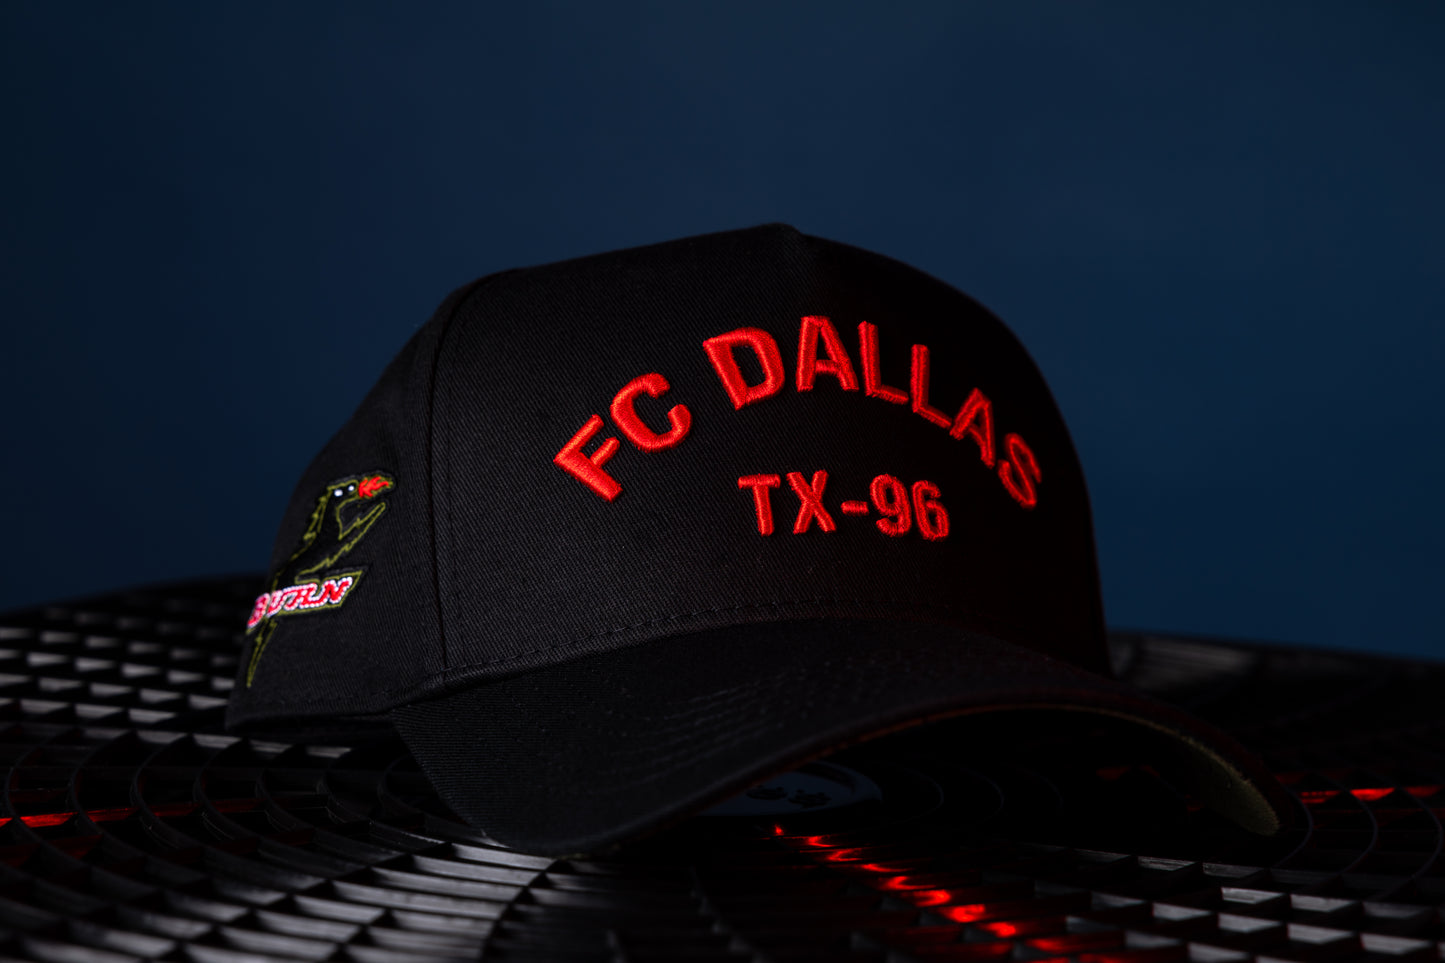 FC Dallas x True Brvnd Military Appreciation Hat